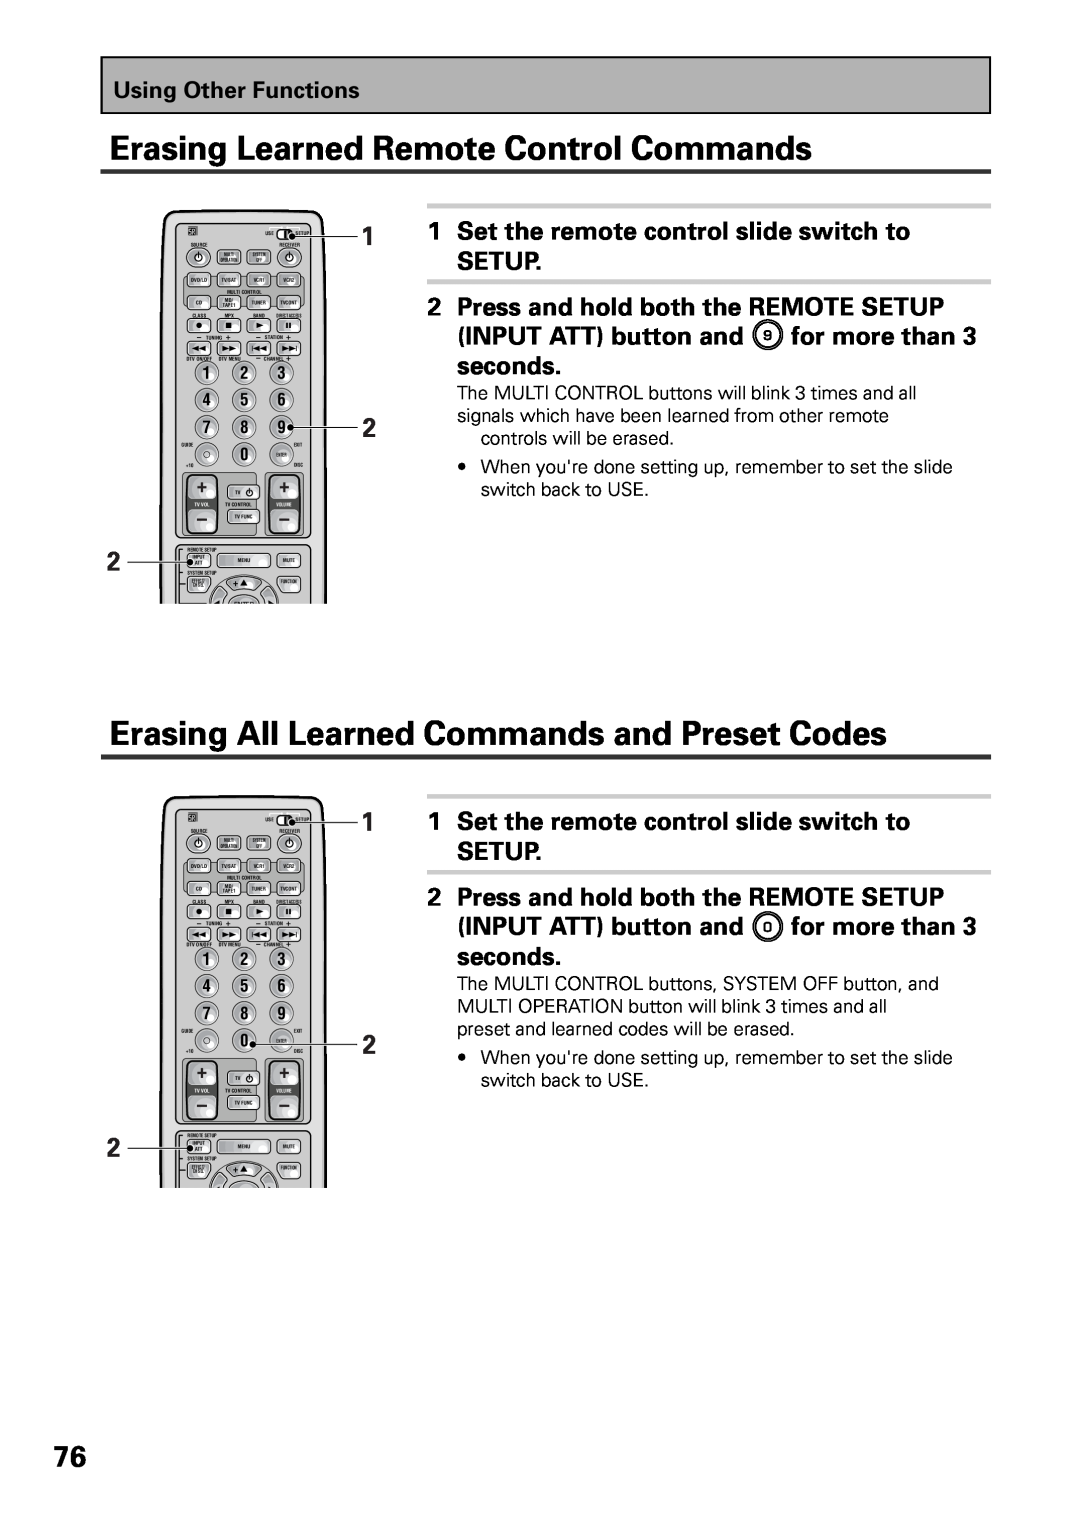 Pioneer VSX-36TX, VSX-37TX Erasing Learned Remote Control Commands, Erasing All Learned Commands and Preset Codes, seconds 